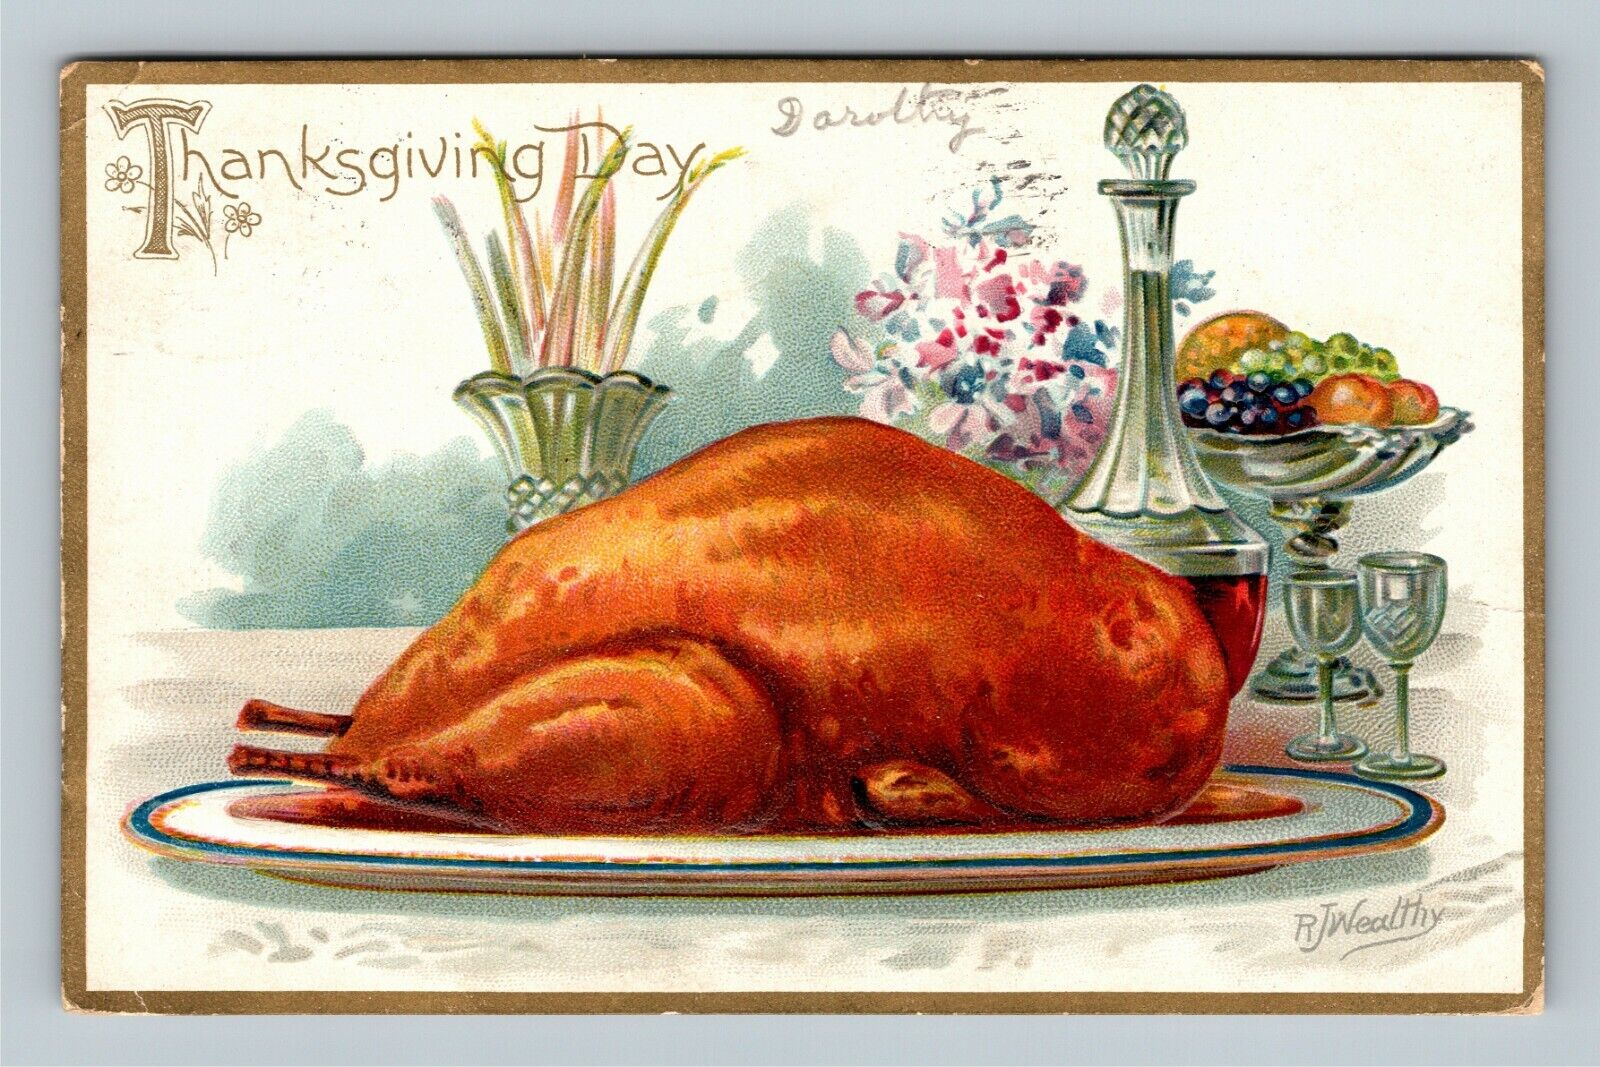 THANKSGIVING-A/S RJ Wealthy Tuck Series #123 Vintage Postcard Turkey Dinner